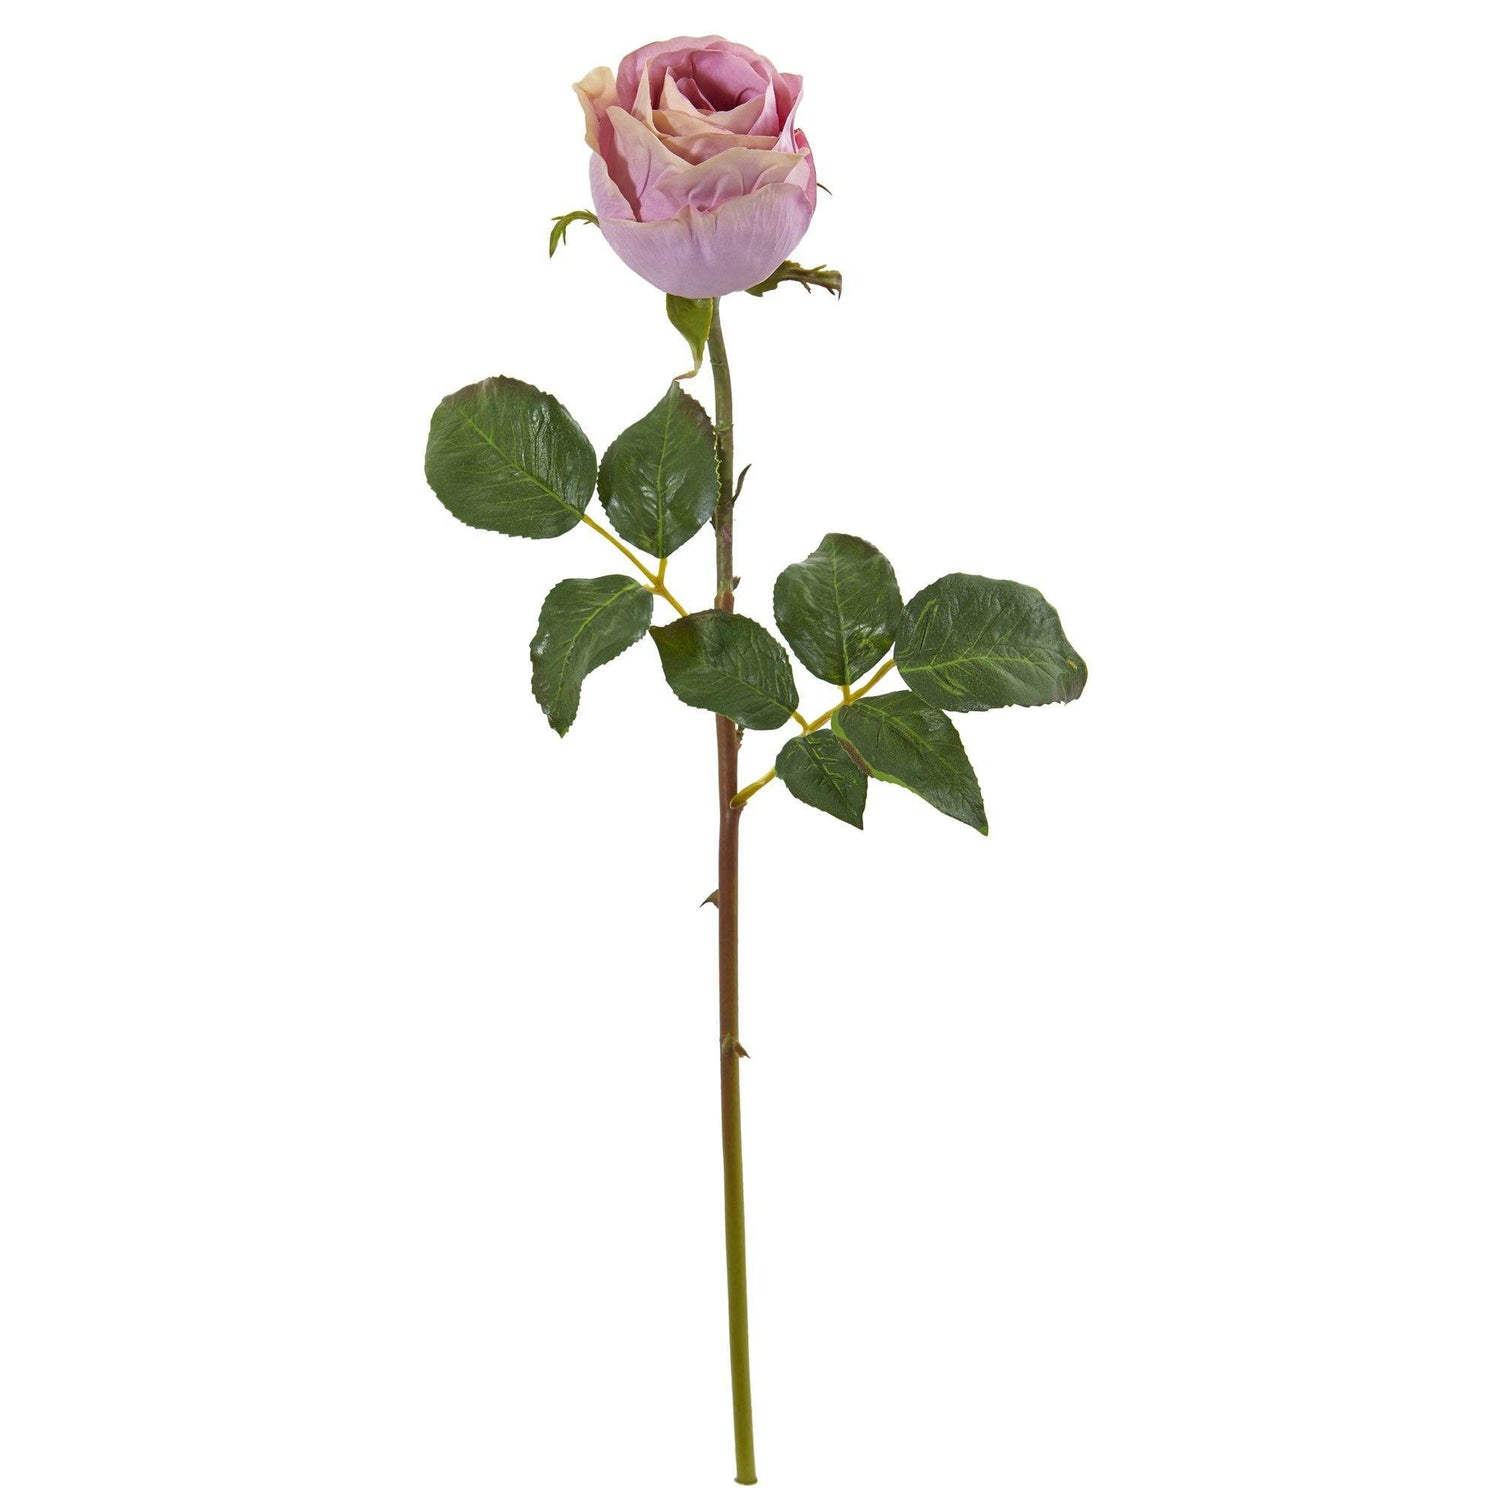 Rosebud on stem with leaves, romantic flower on transparent